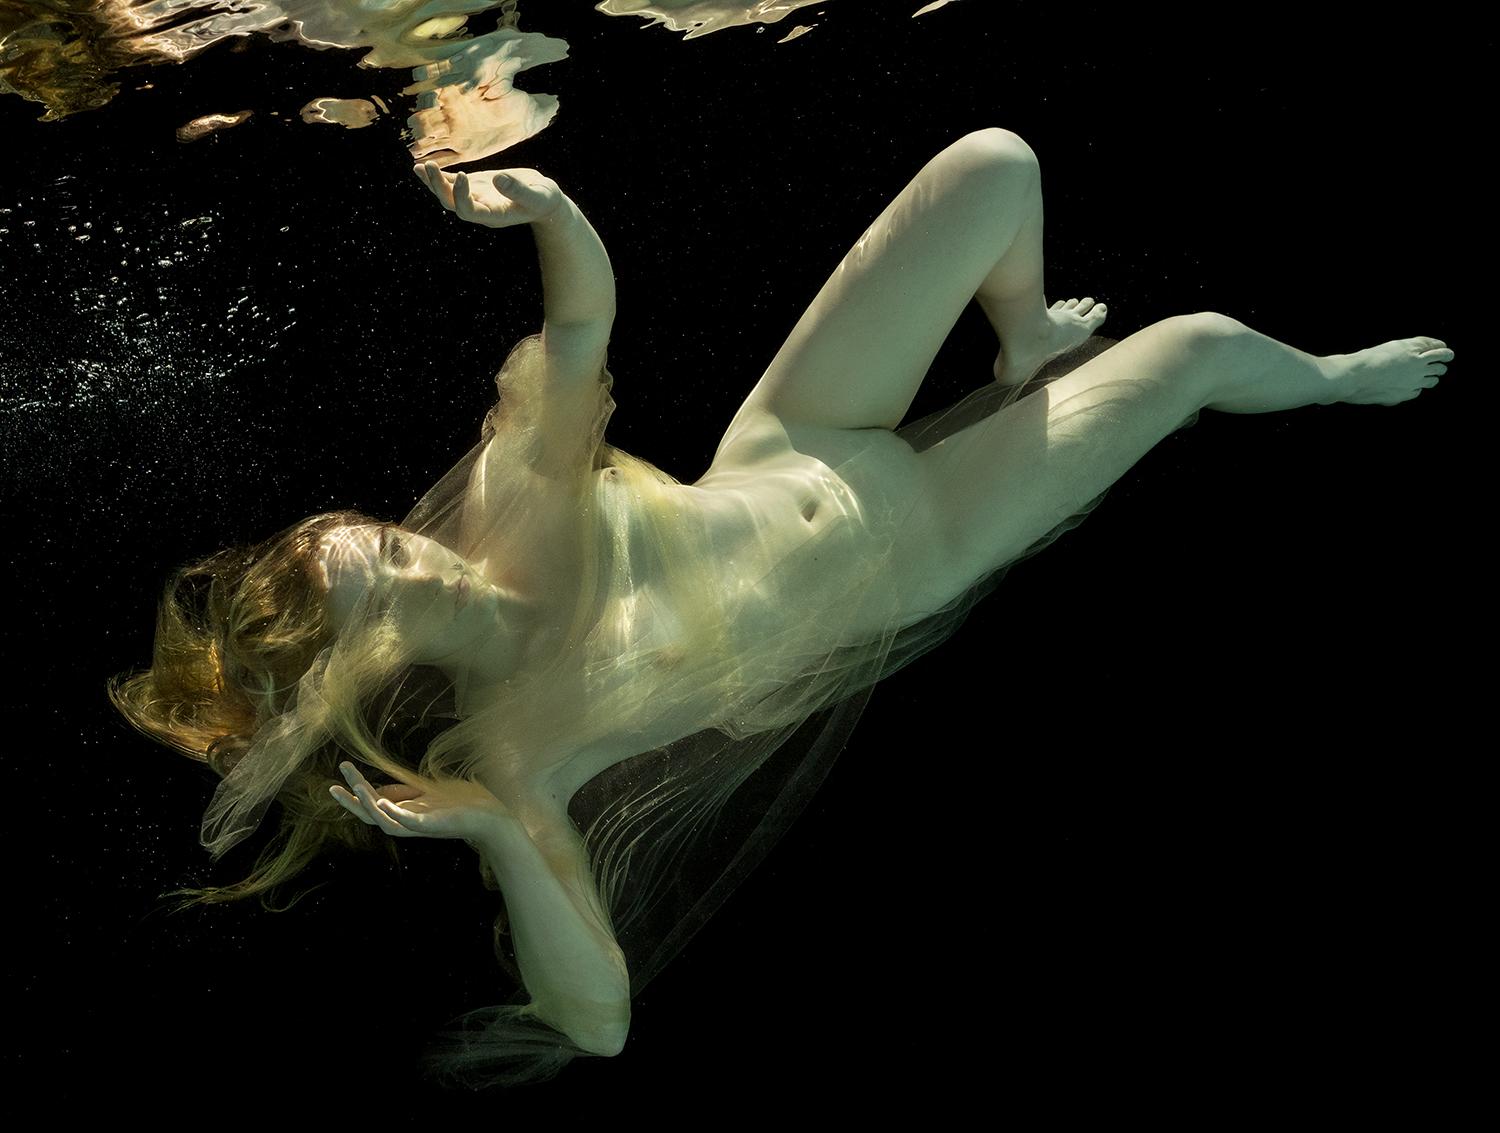 Danae and Zeus - underwater nude photograph - print on paper 27x35